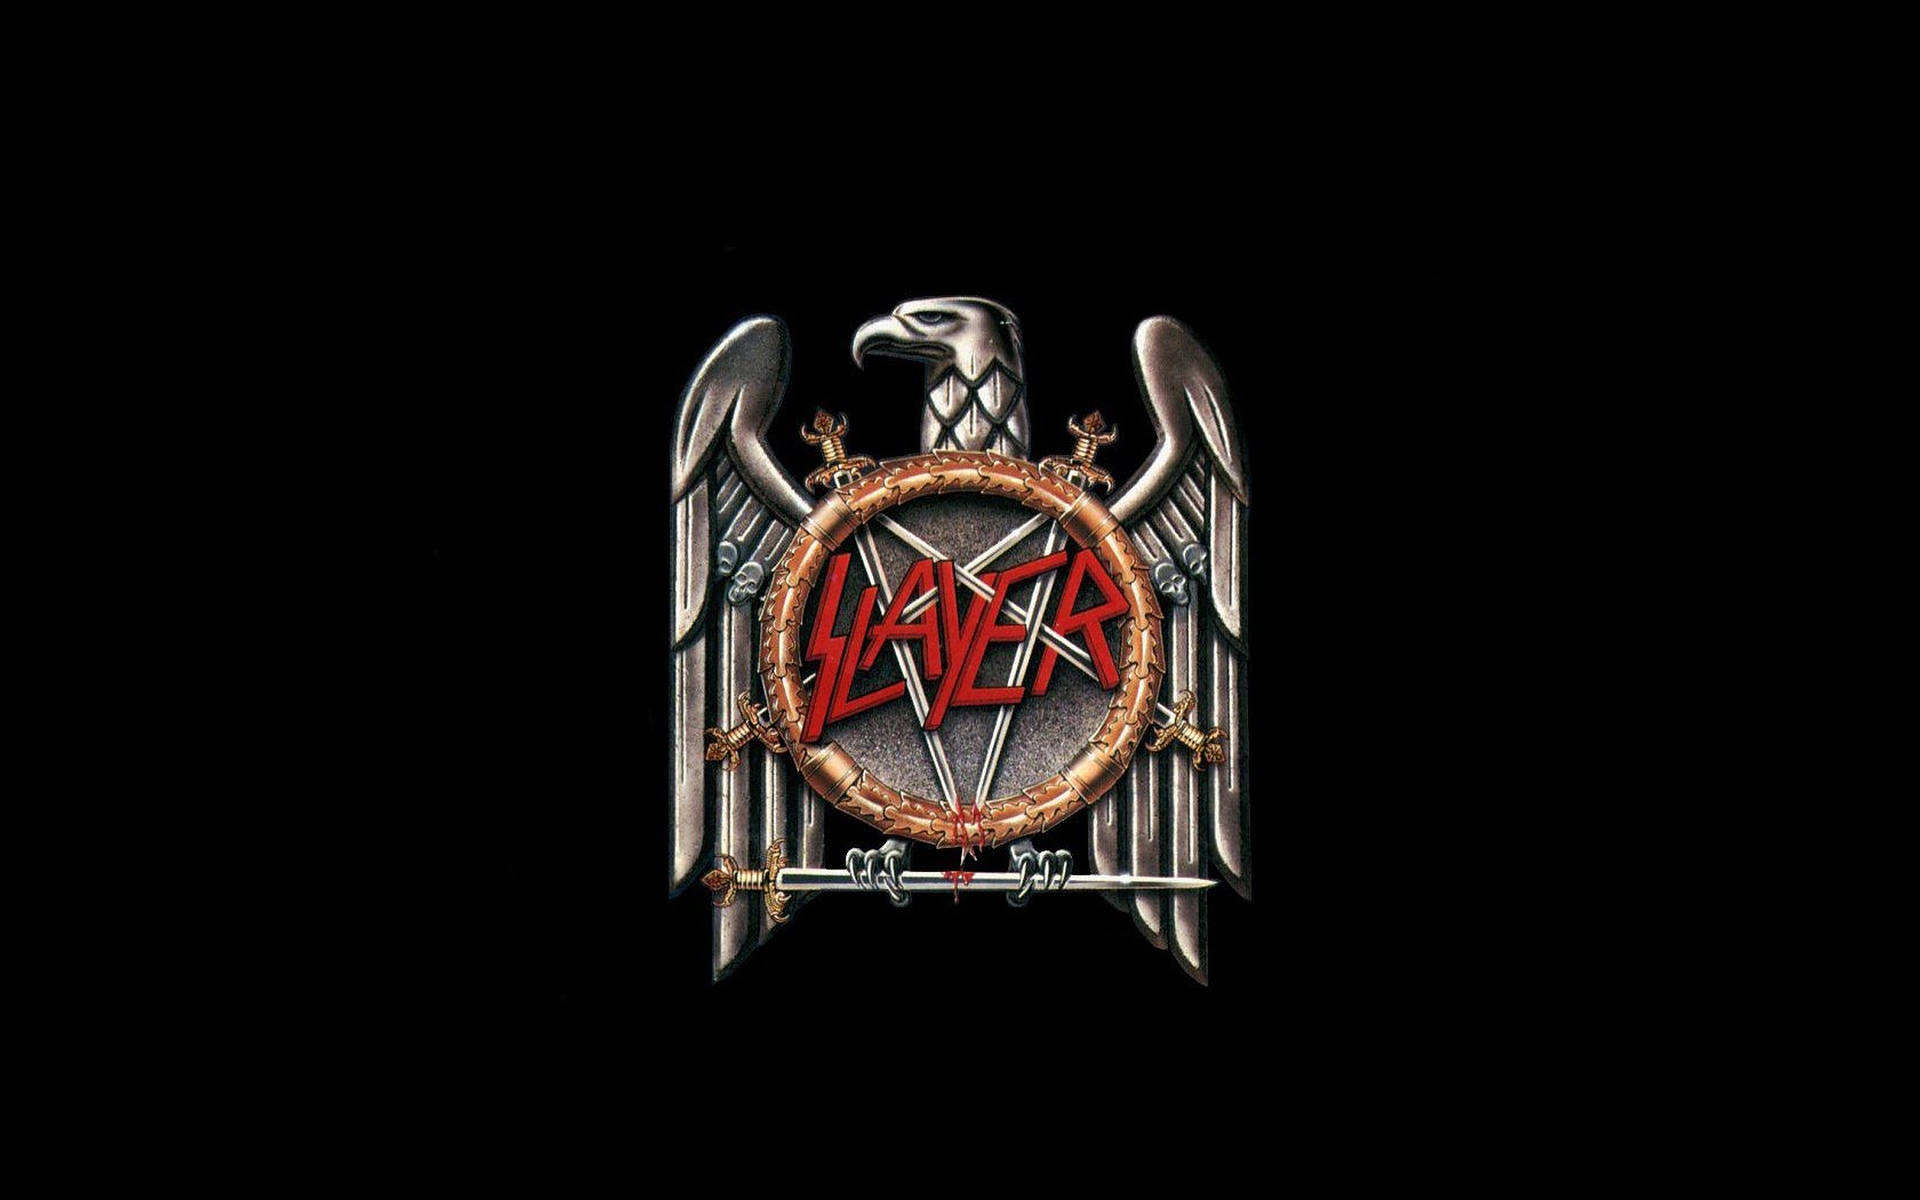 Black Eagle Slayer Band Logo Wallpaper